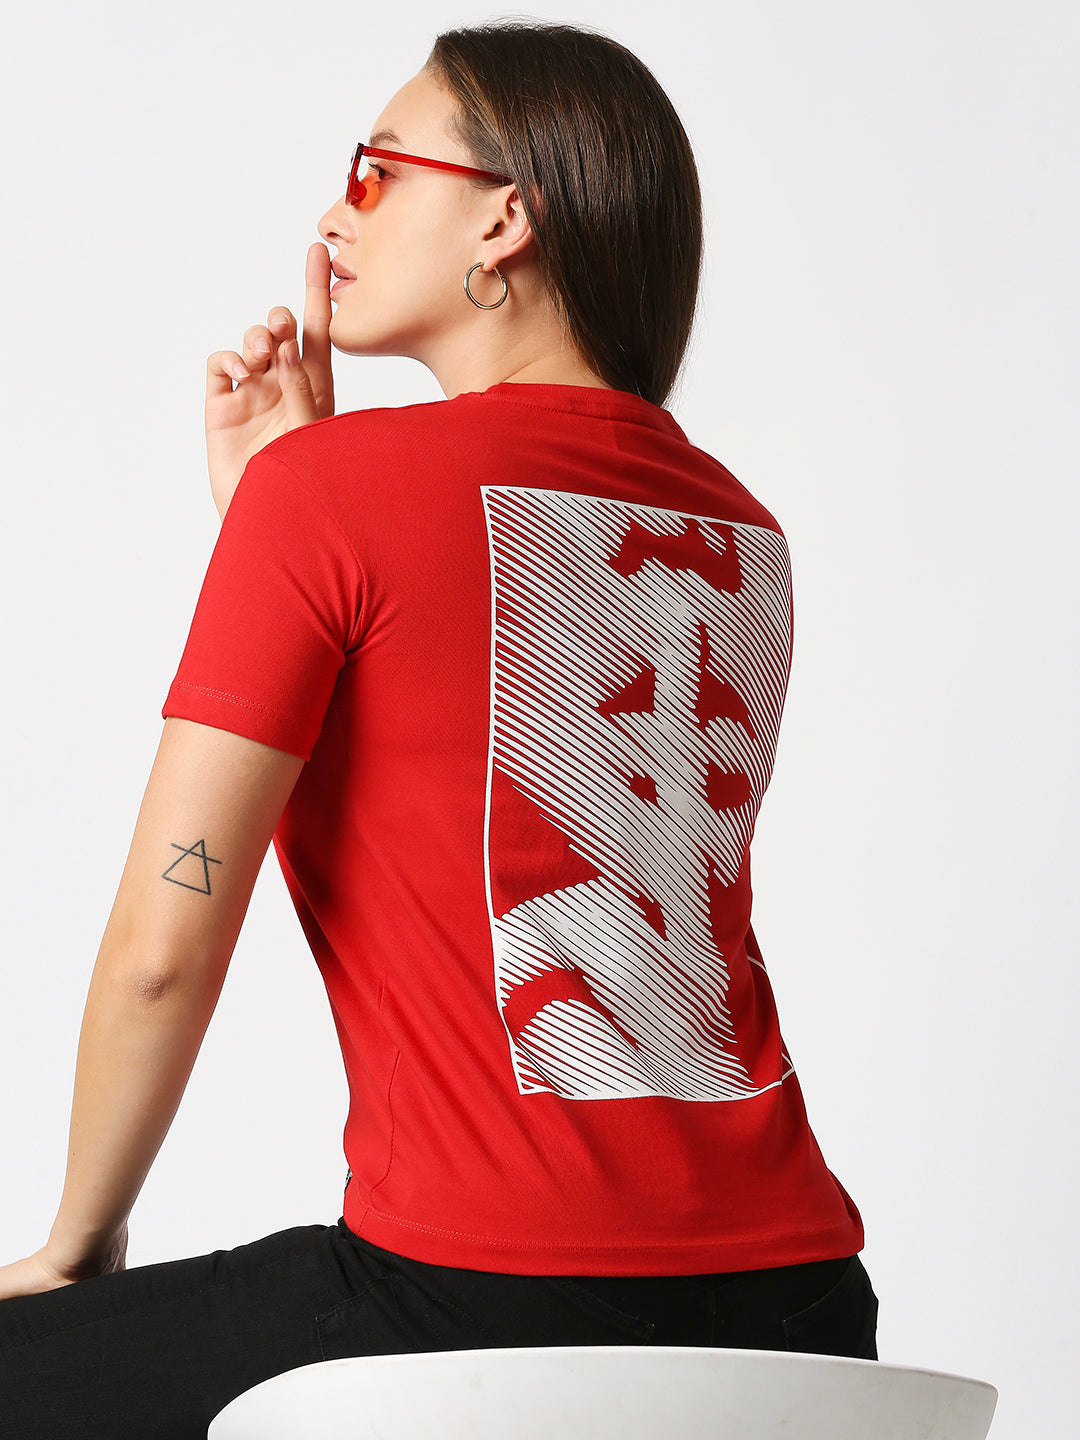 Buy Womenâ€™s Comfort fit Cherry Red Back print T-shirt